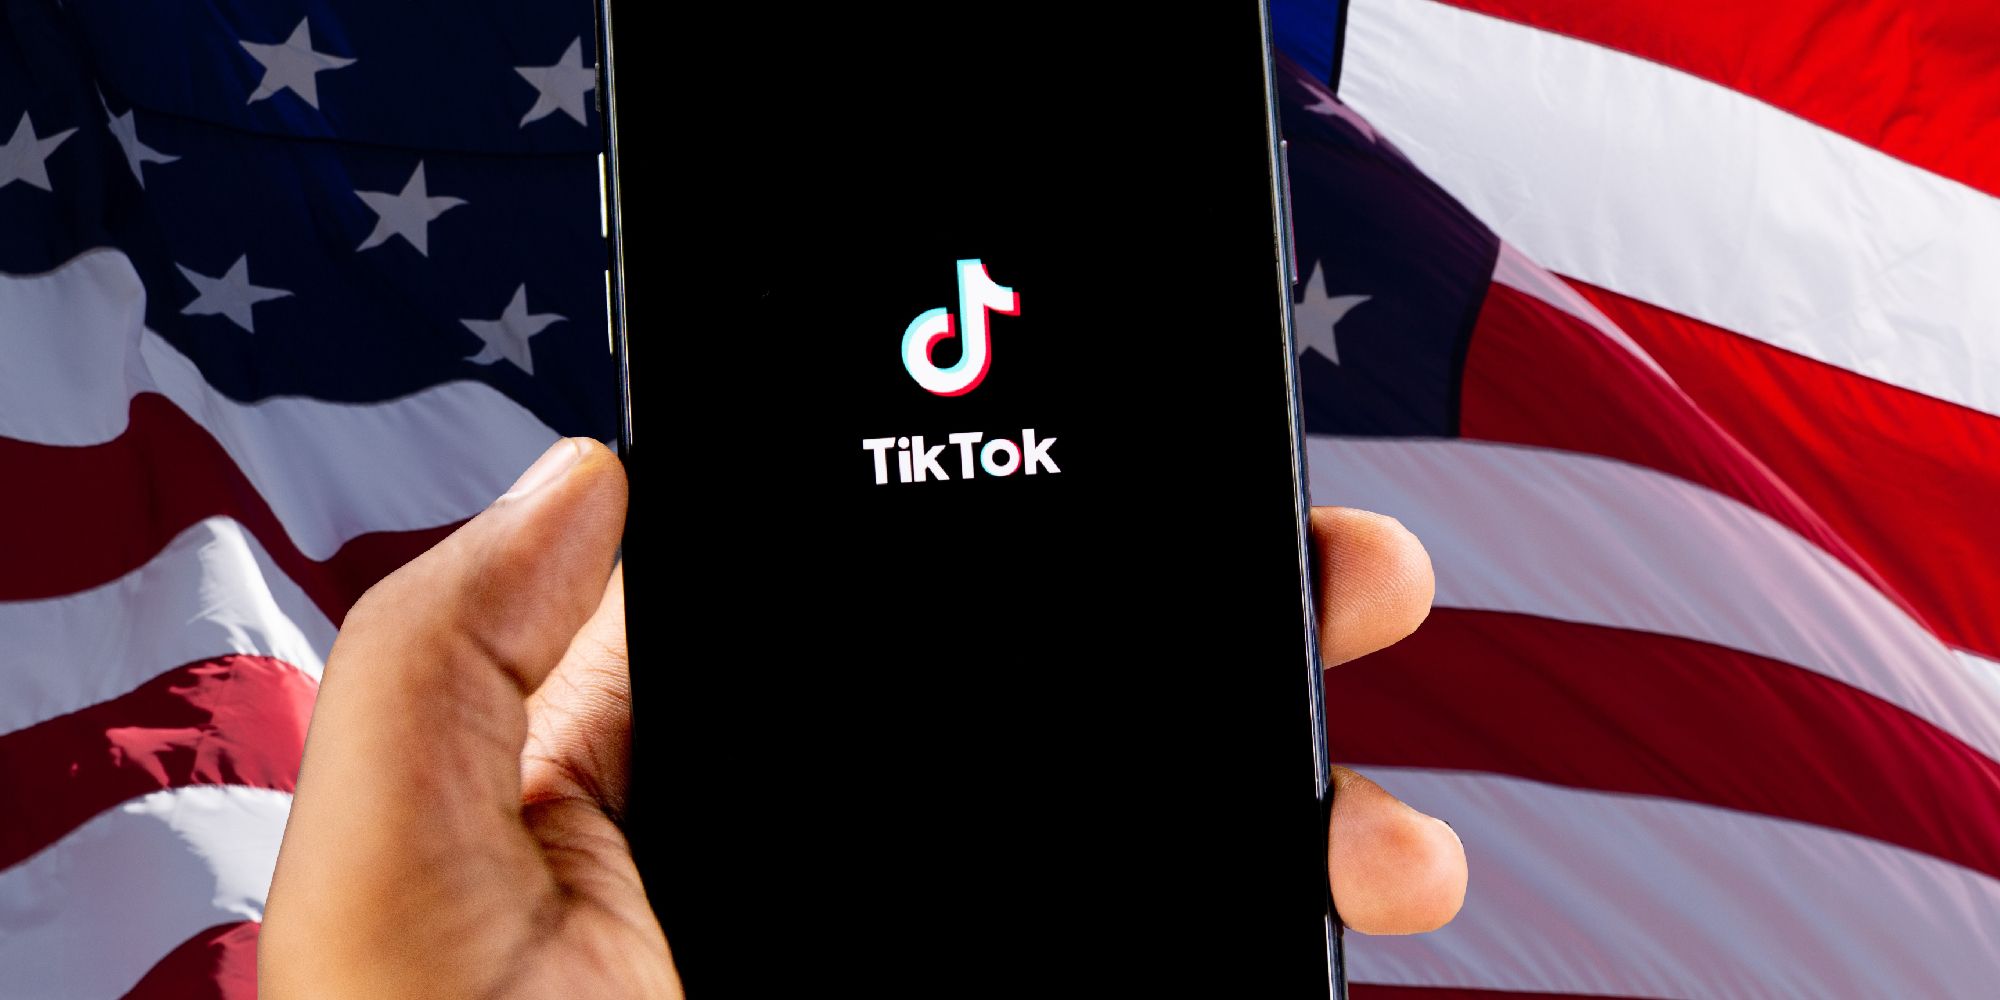 TikTok app on Smartphone in front of US flag